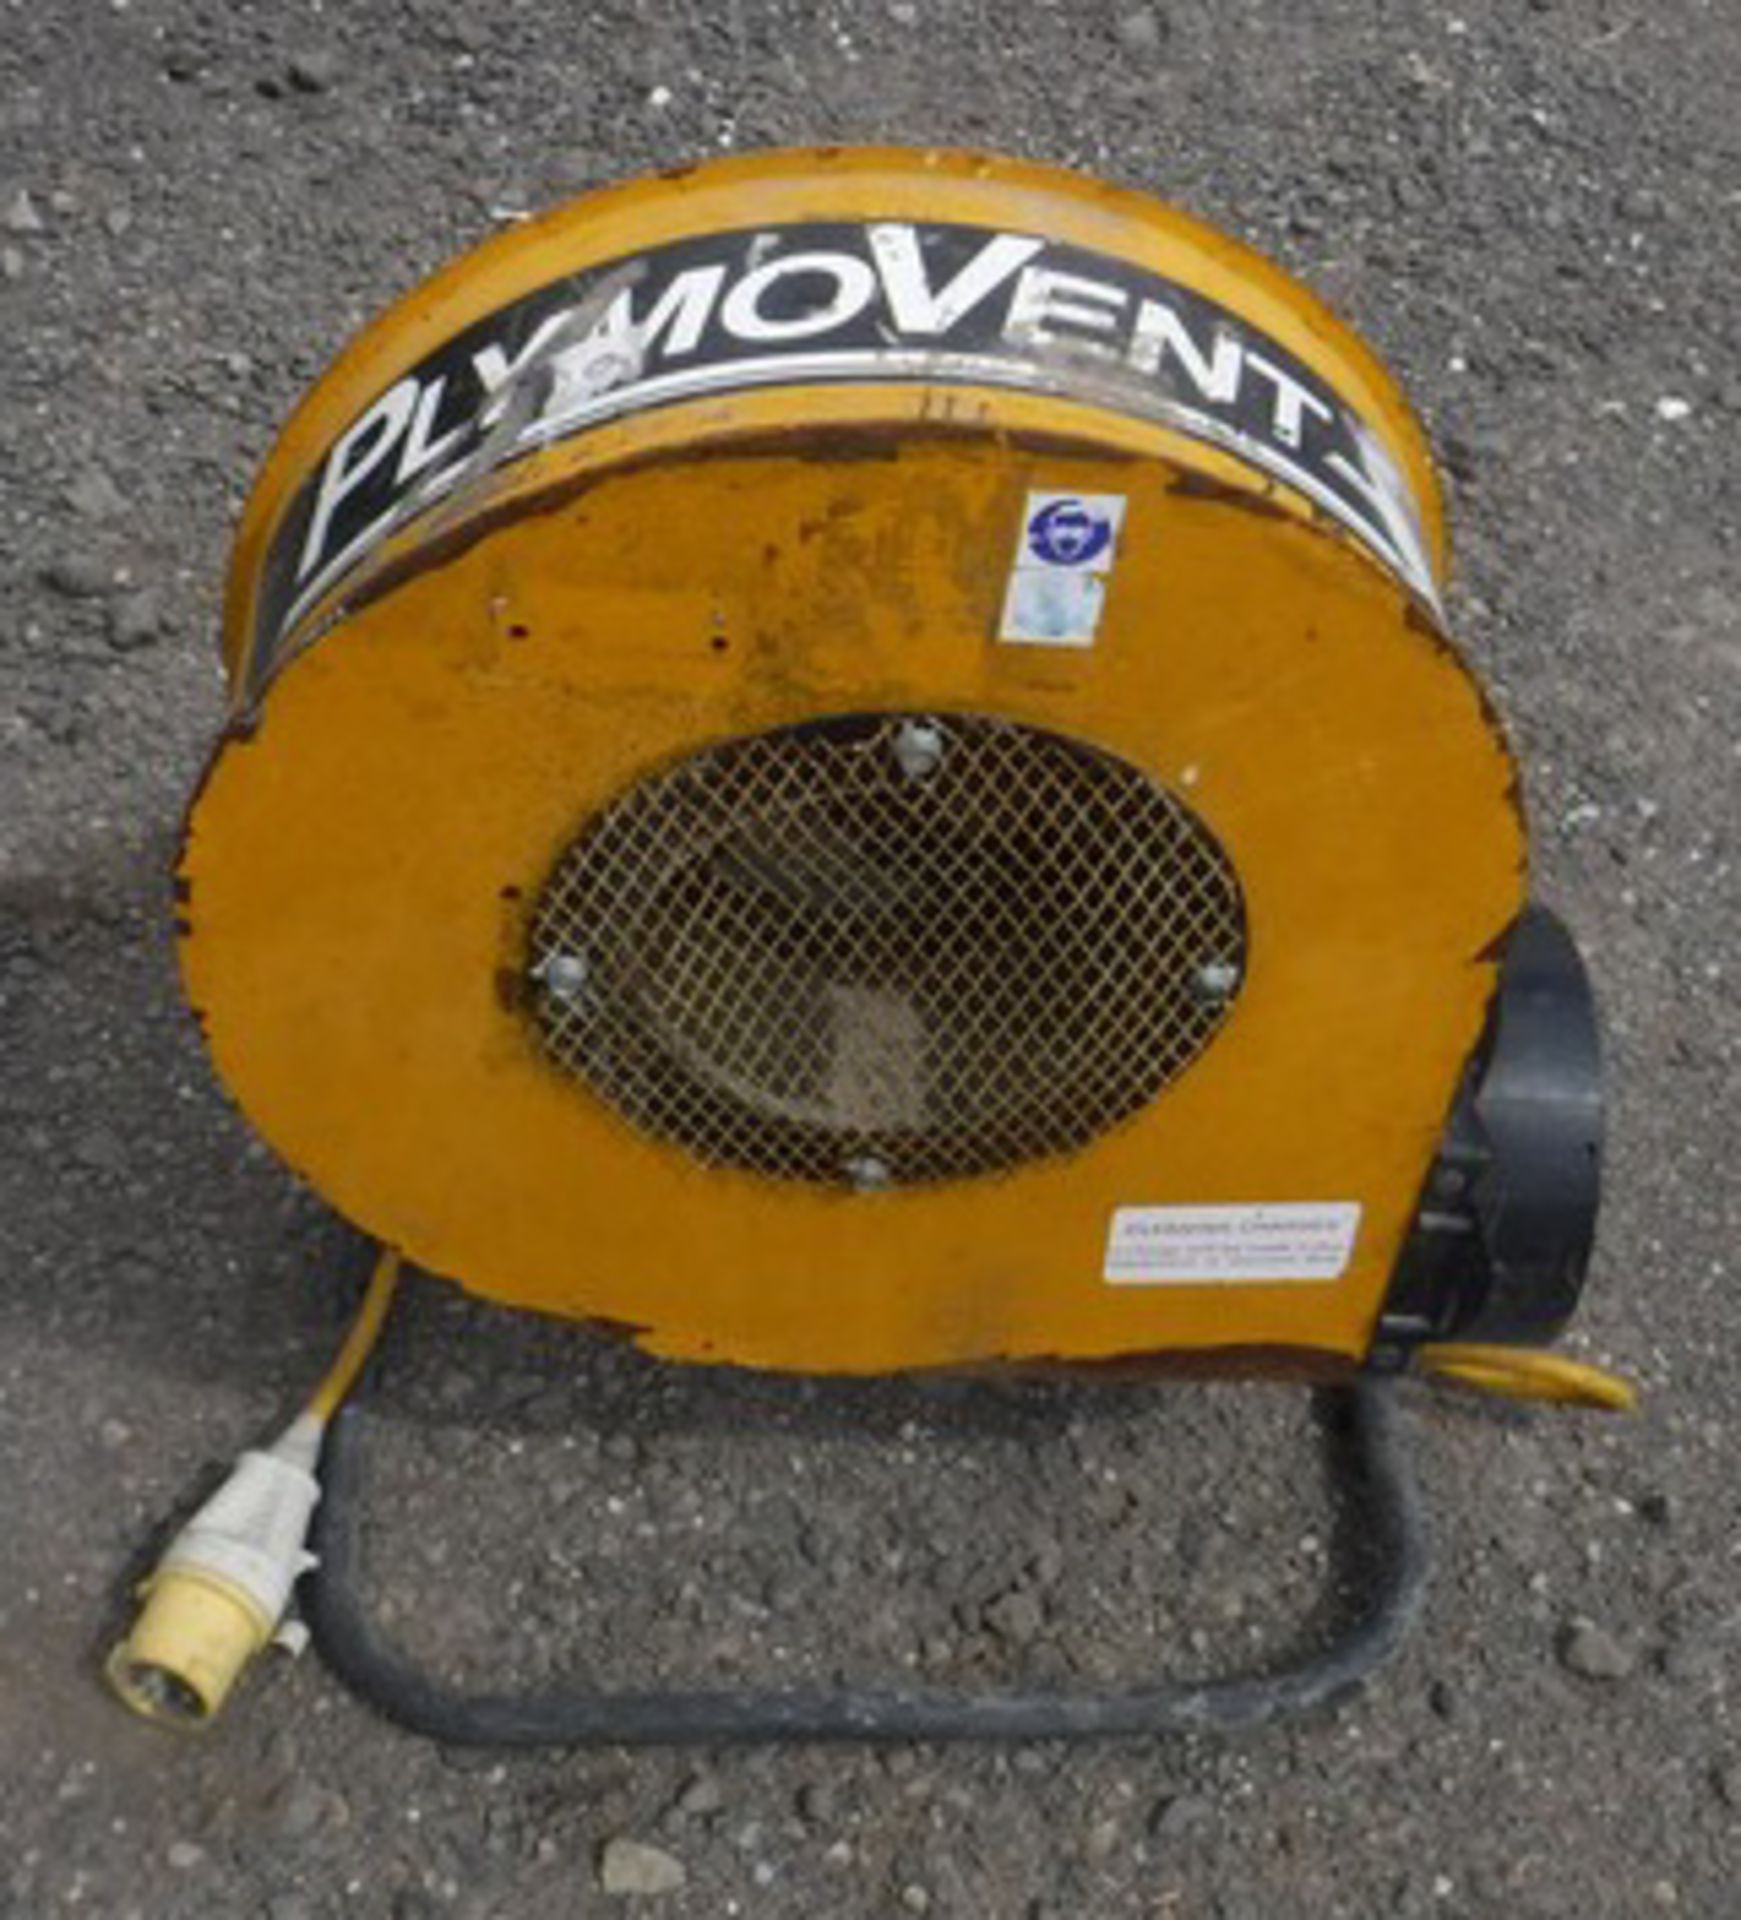 PLYMO vent blower. Model no 1801. S/N 003